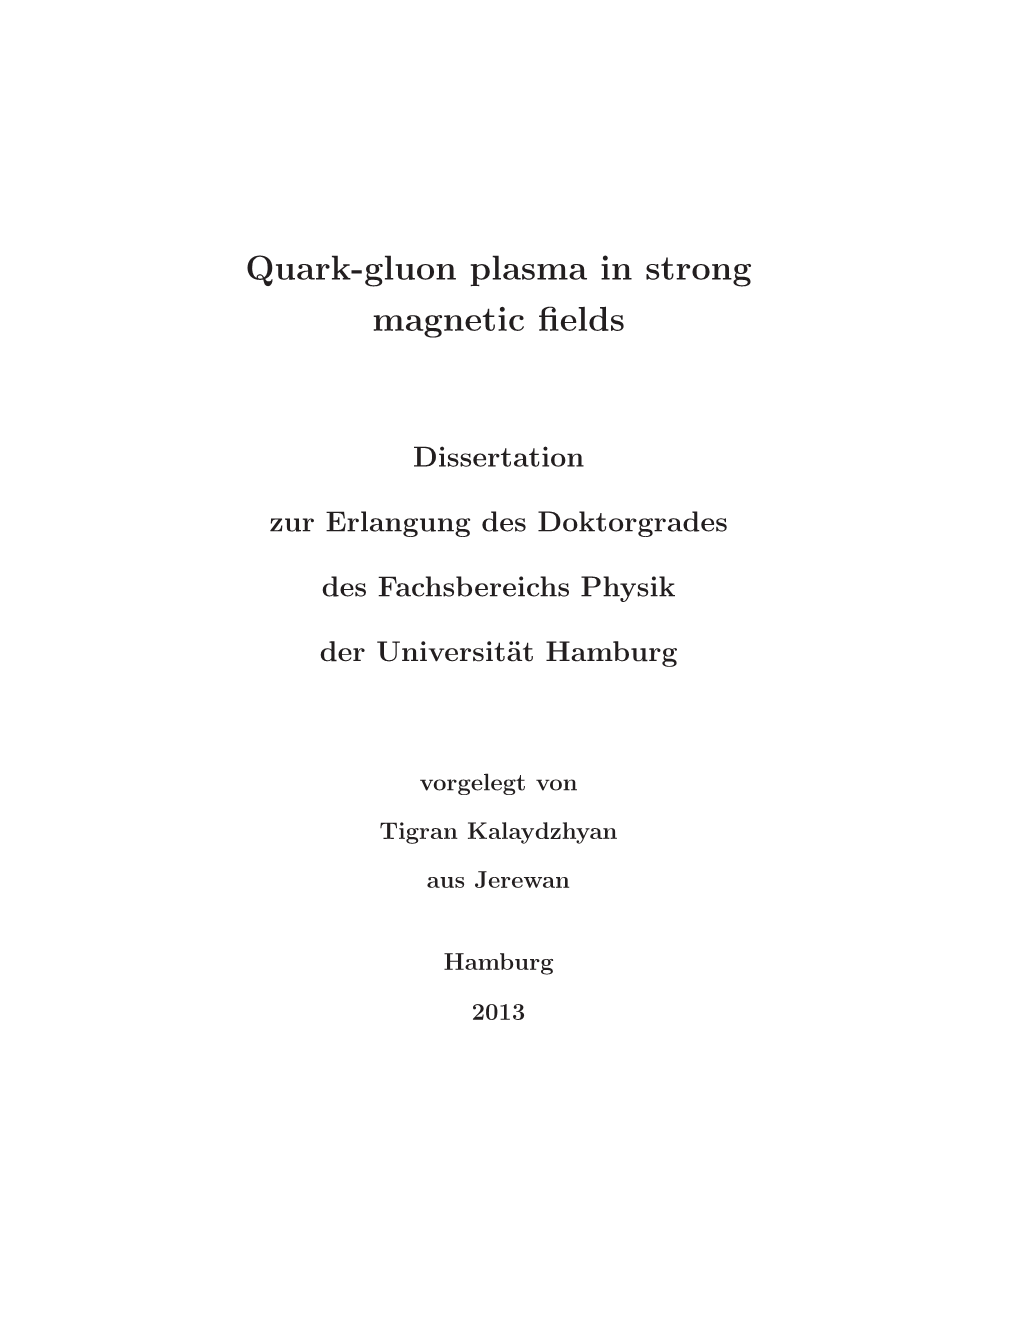 Quark-Gluon Plasma in Strong Magnetic Fields